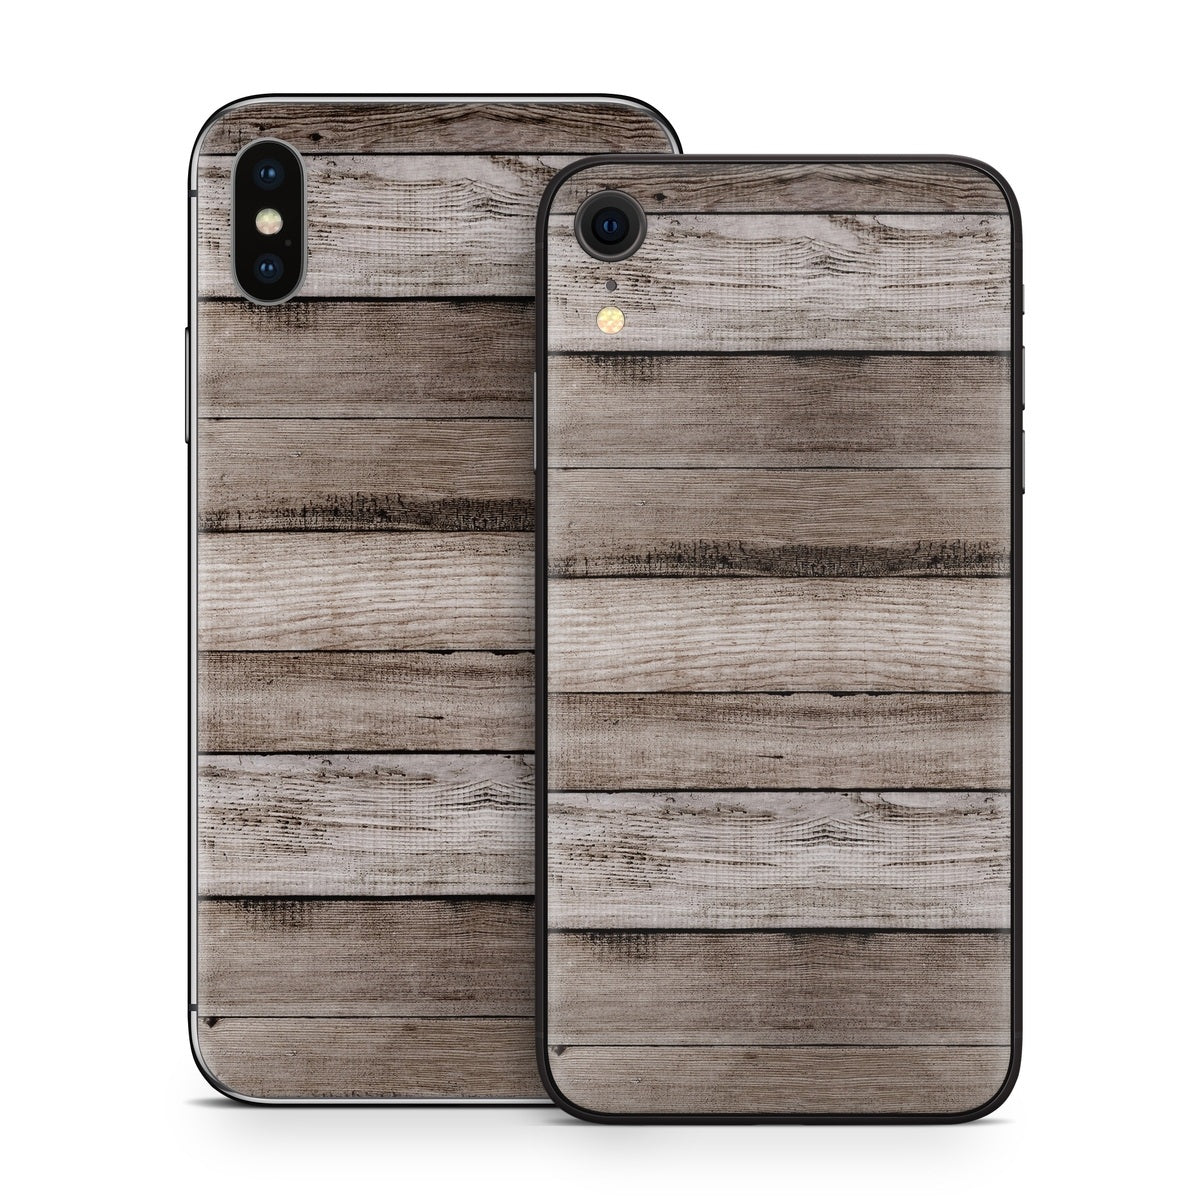 Barn Wood - Apple iPhone X Skin - Reclaimed Woods - DecalGirl